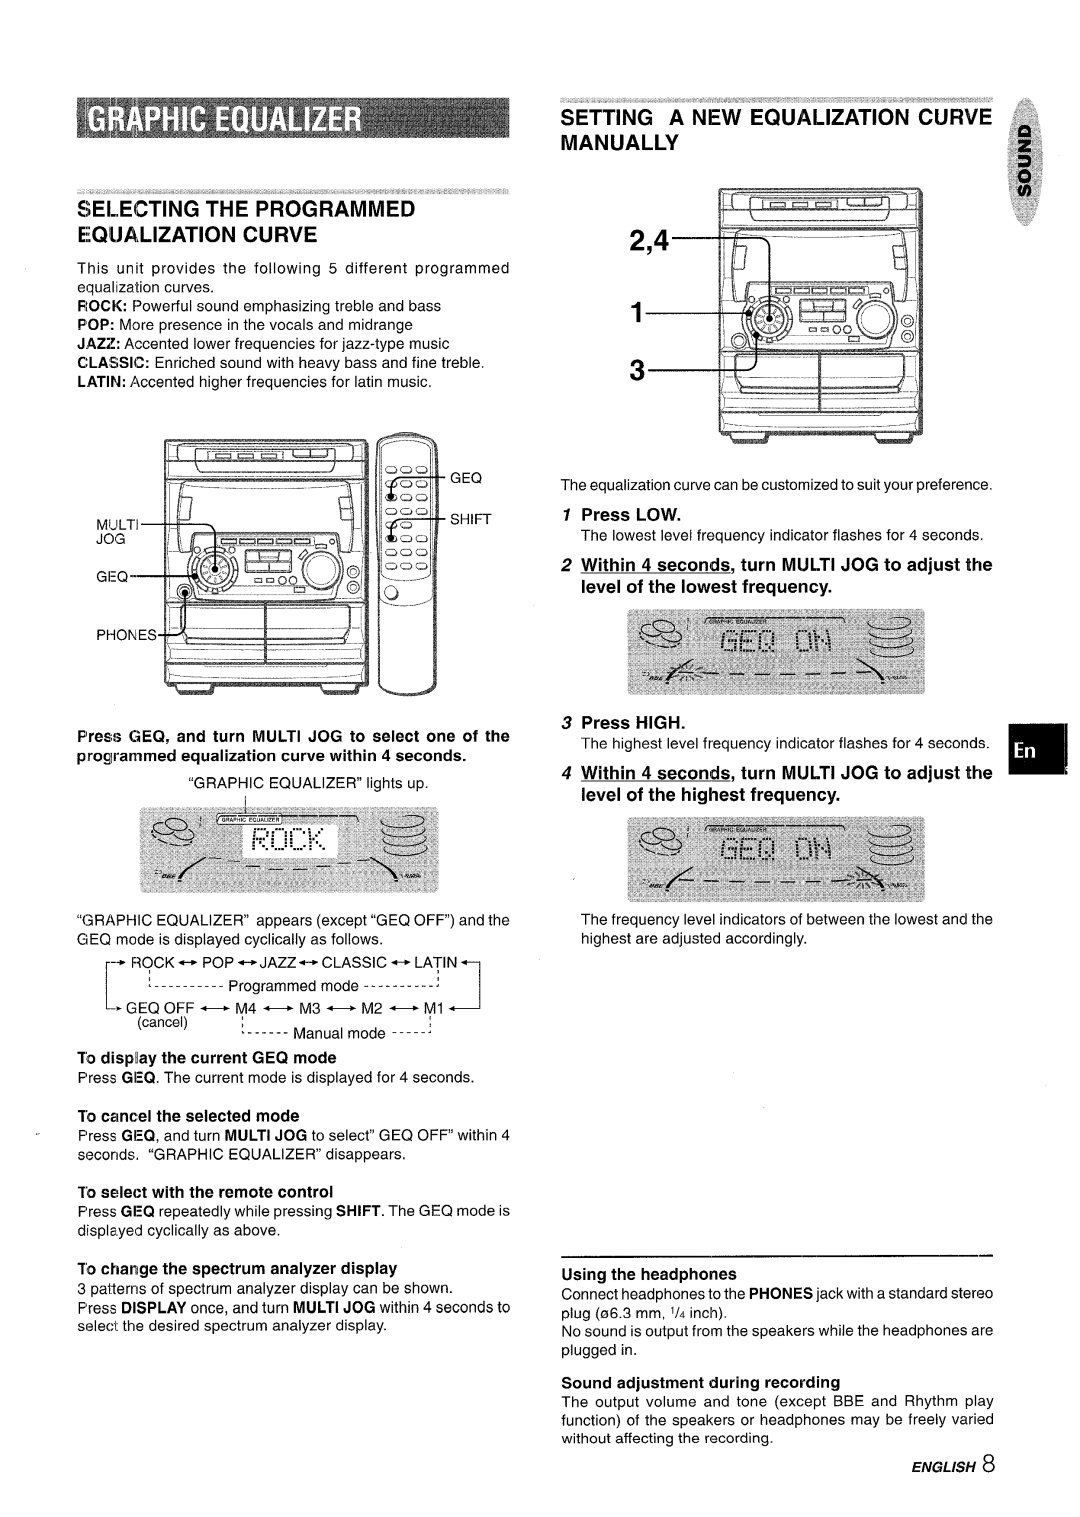 Sony NSX-A707 manual iEI.,EiiTING THE PR0GRAMiiii5 EQJALIZATION CURVE, Setting A New Equalization Curve Manually, Press LOW 